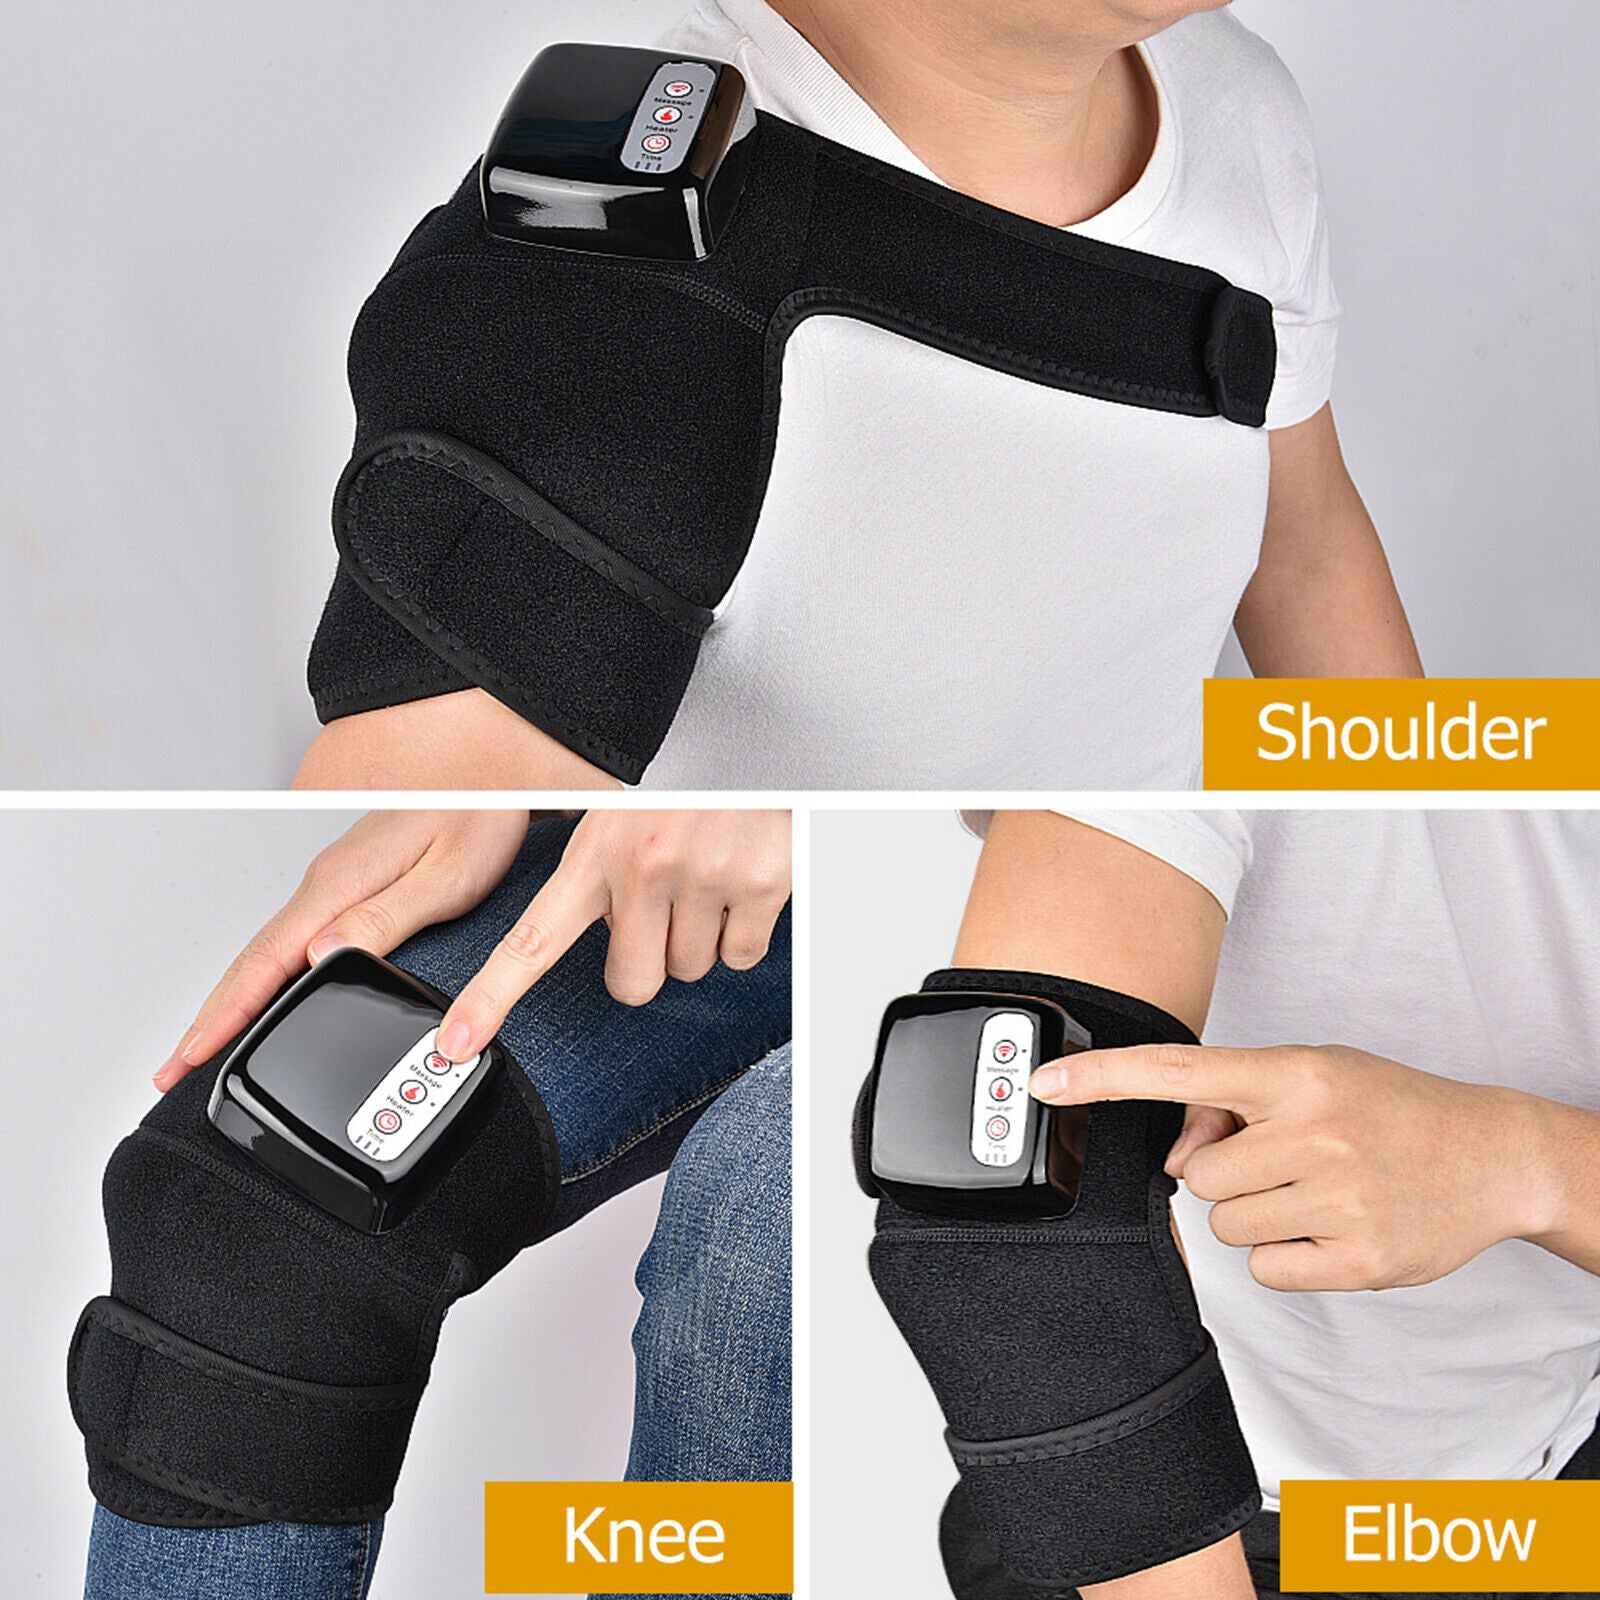 Wireless Knee Massager Pain Relief Back Shoulder Massage Instrument US Plug